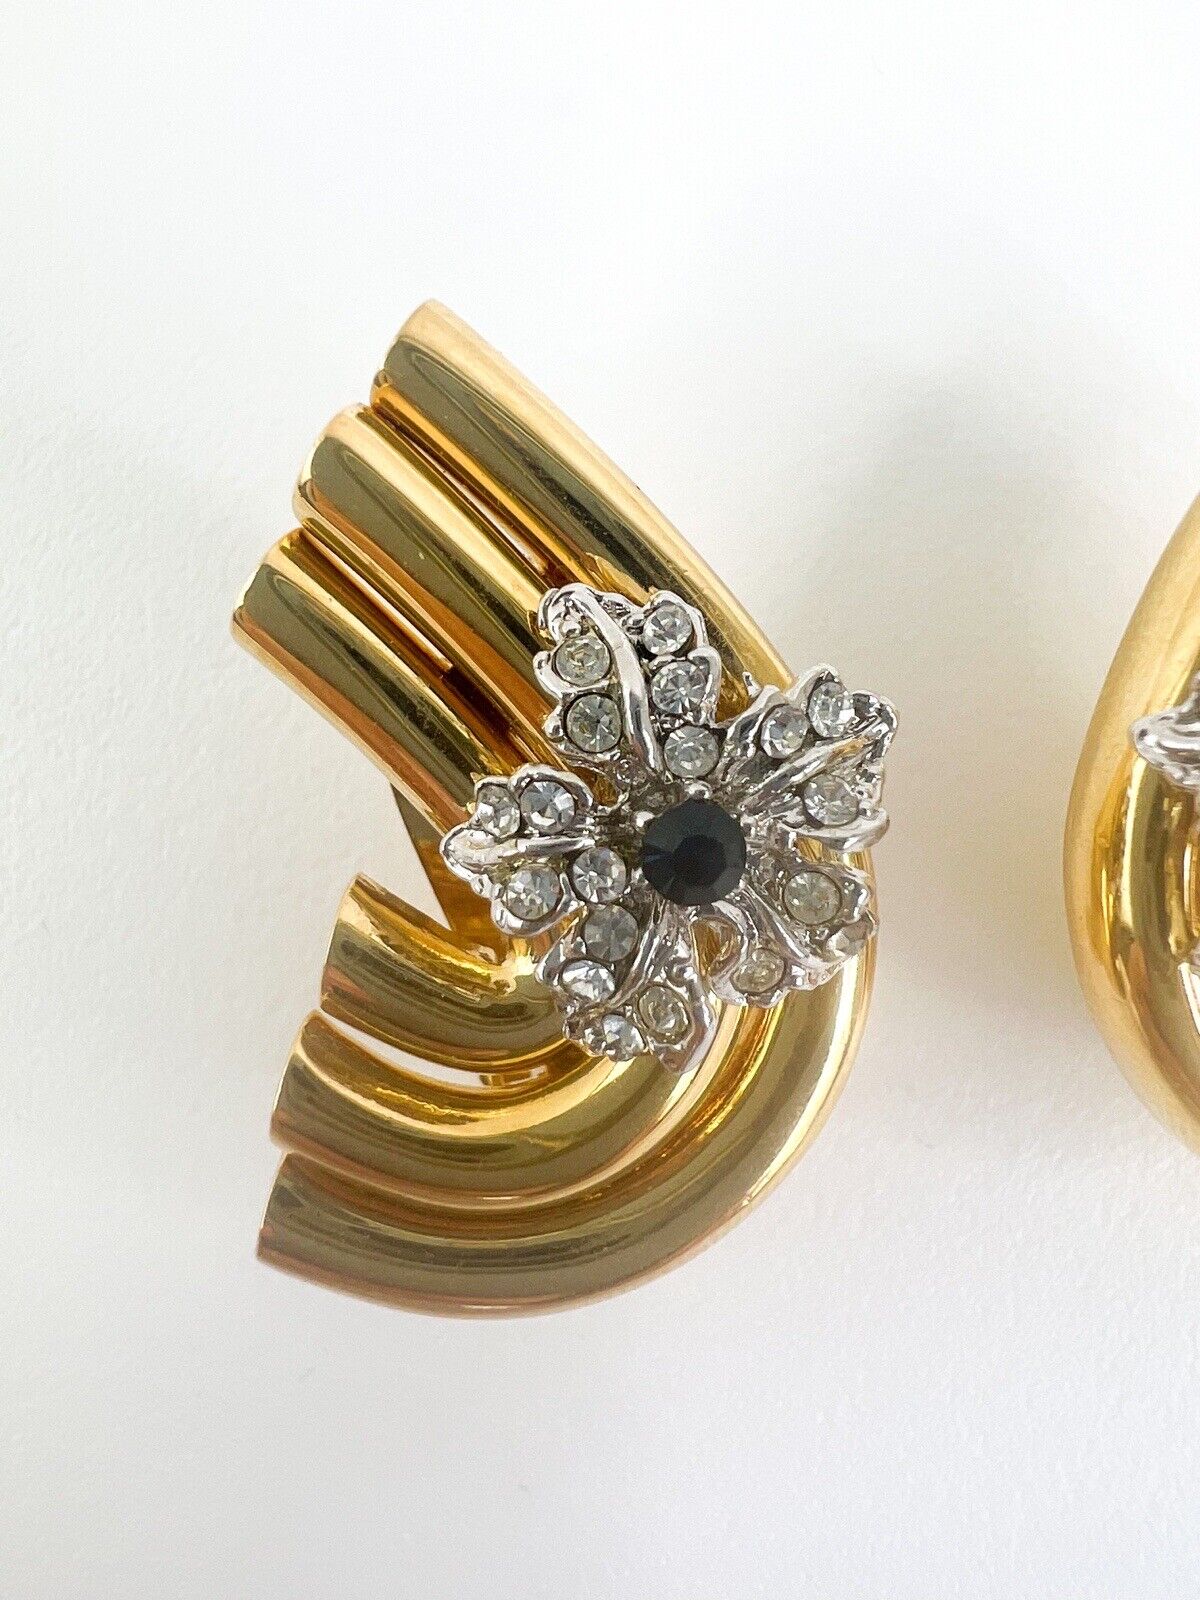 BALMAIN  Earrings Vintage, Daisy Flower Earrings, Modern Bridal Pearl, Gift for her Jewelry for Women, Personalized Gifts, Wedding Jewelry